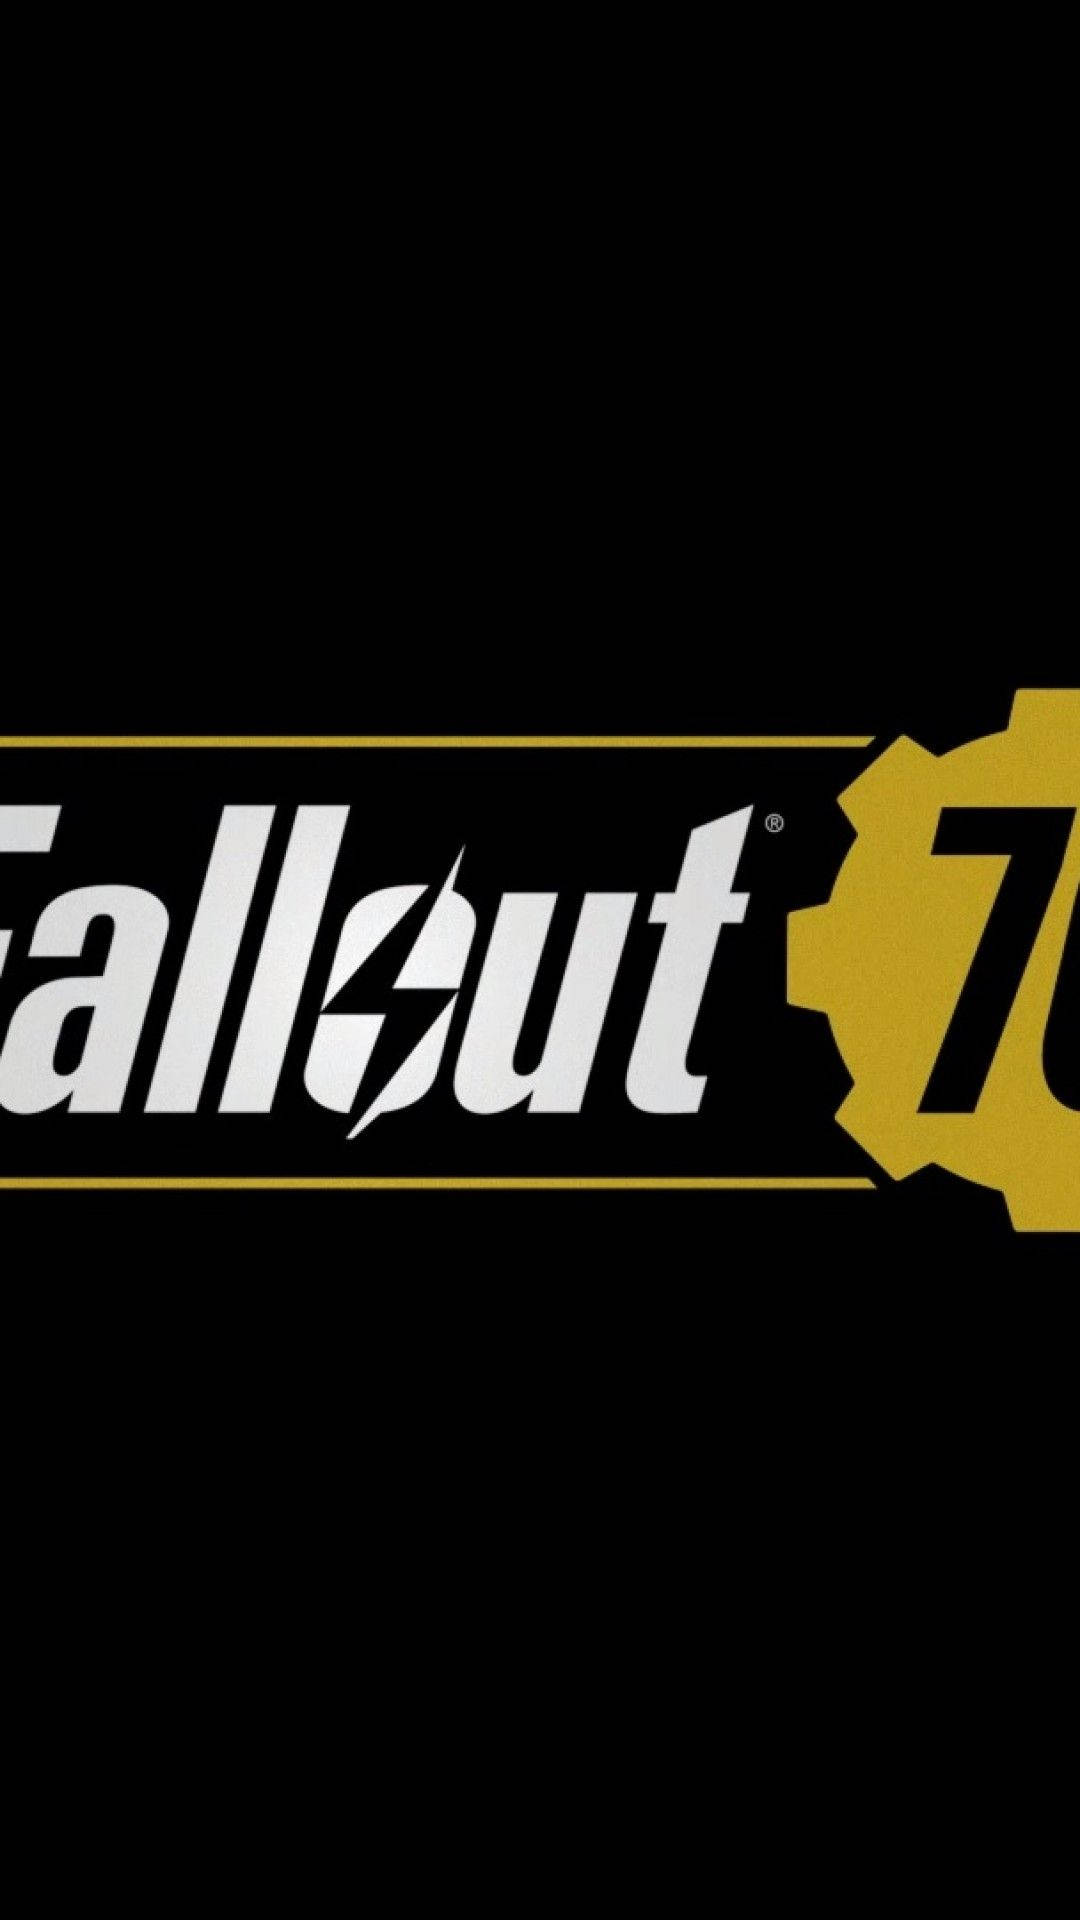 File:Fallout 76 logo.png - Wikimedia Commons